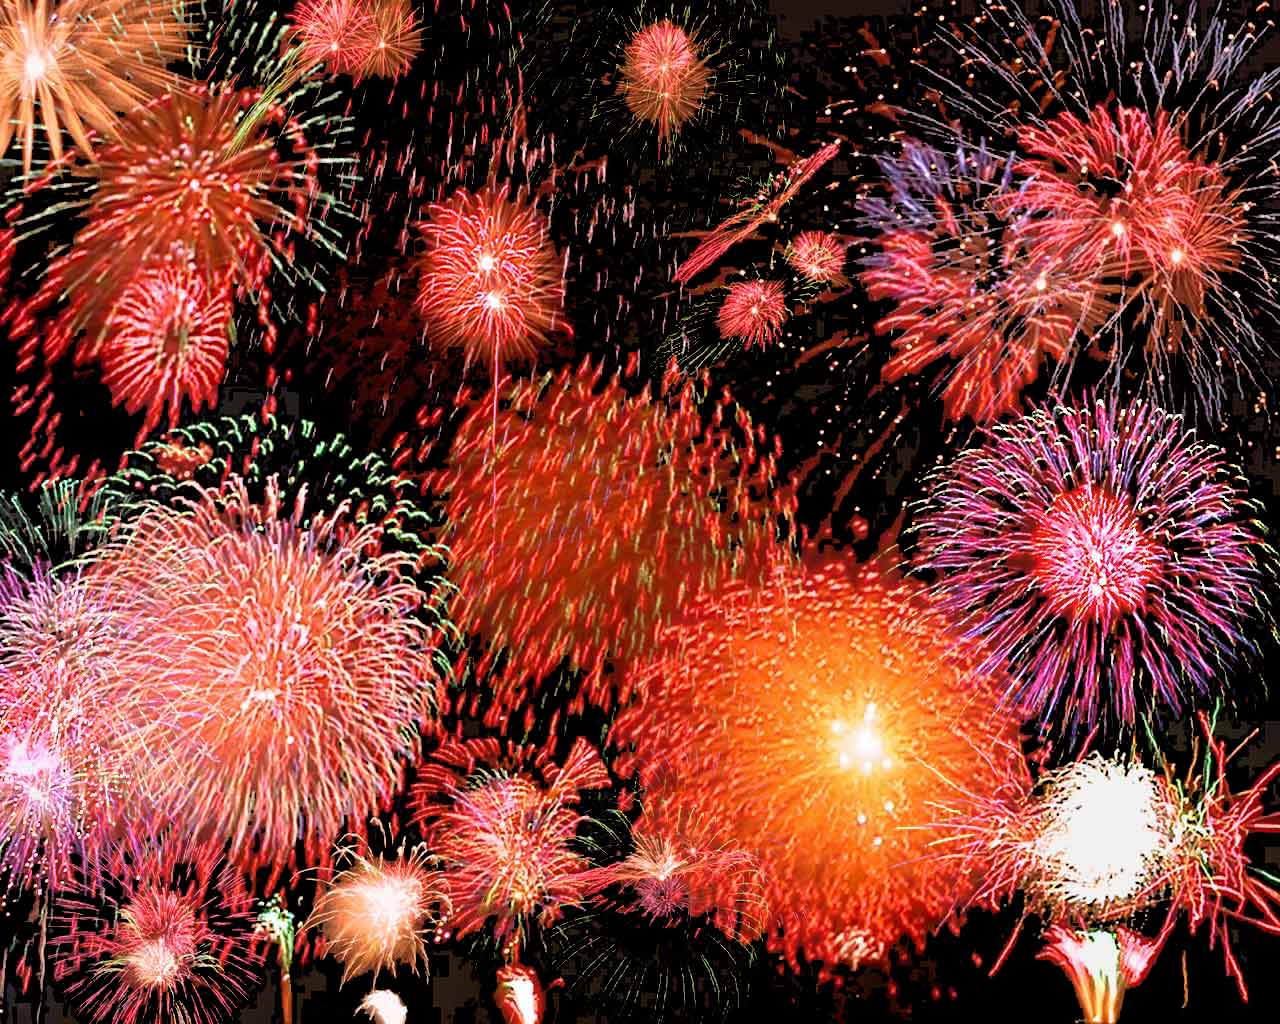 http://theevanstonian.files.wordpress.com/2011/07/fireworks11.jpg